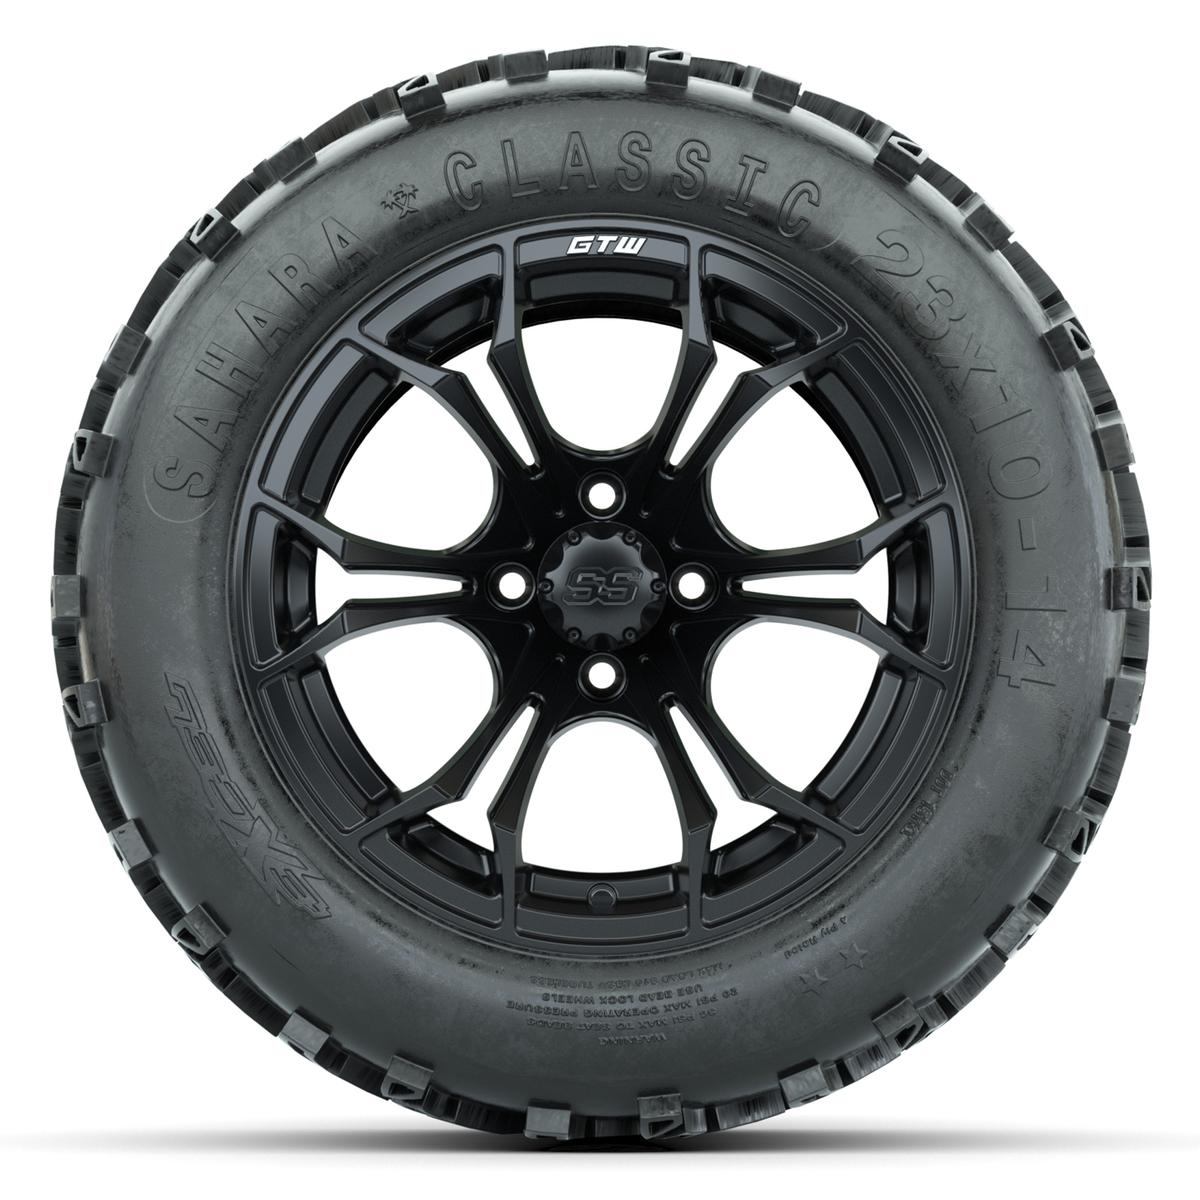 GTW Spyder Matte Black 14 in Wheels with 23x10-14 Sahara Classic All-Terrain Tires – Full Set